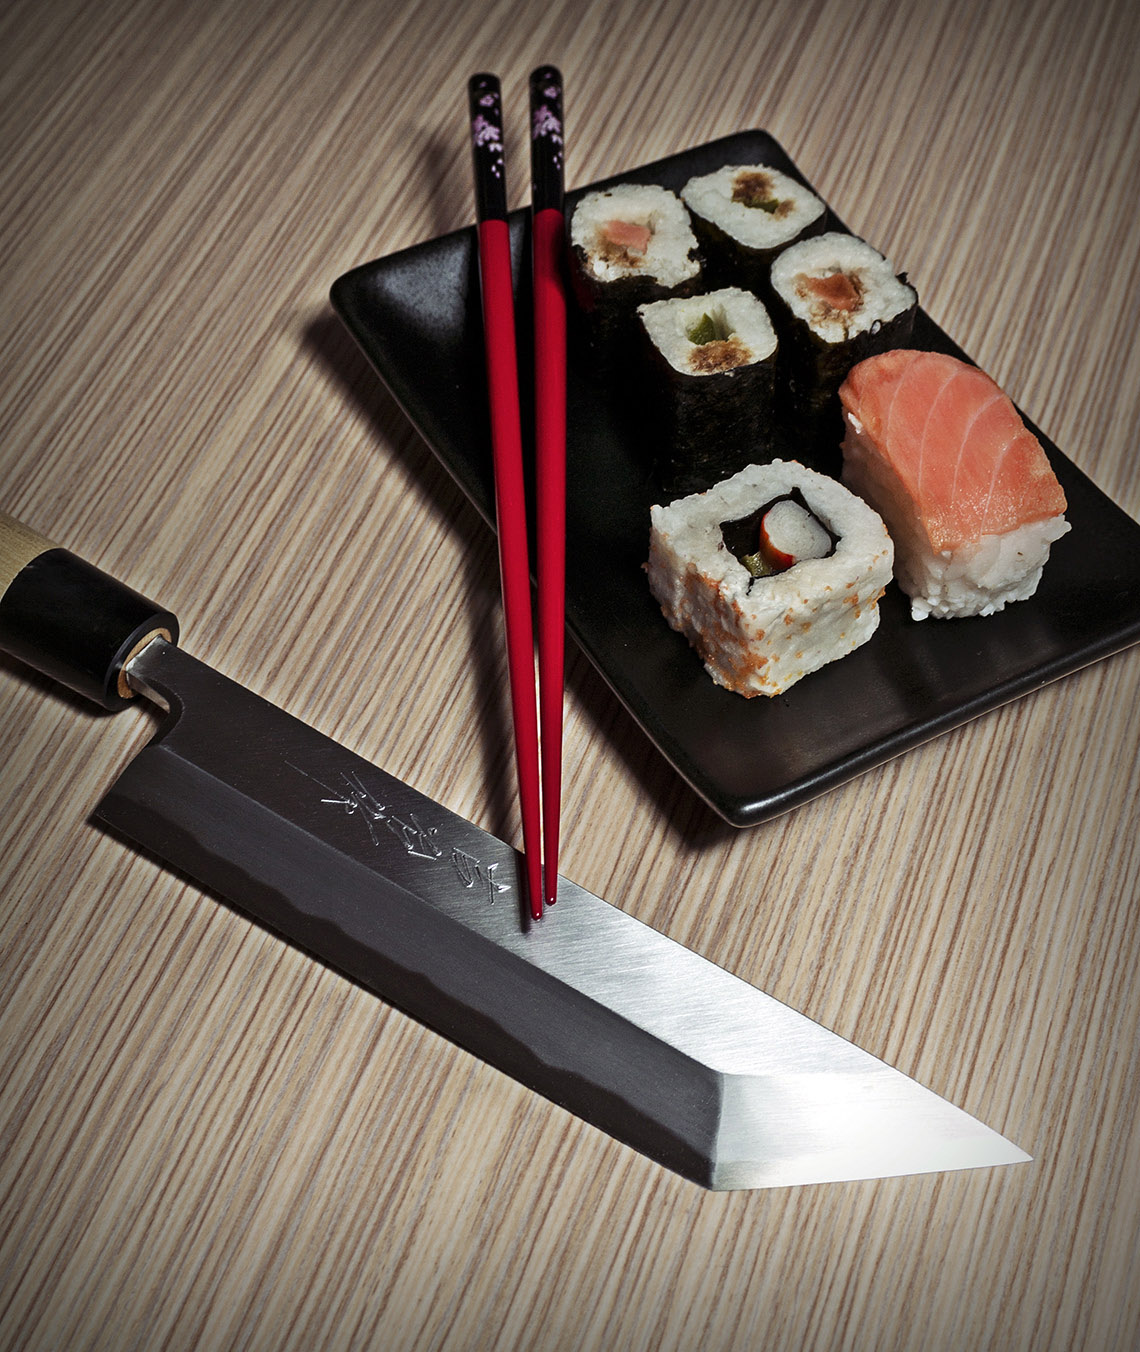 Yanagiba, Yanagi Sashimi, Ko-Yanagi - egzotyczne nazwy noży do sushi